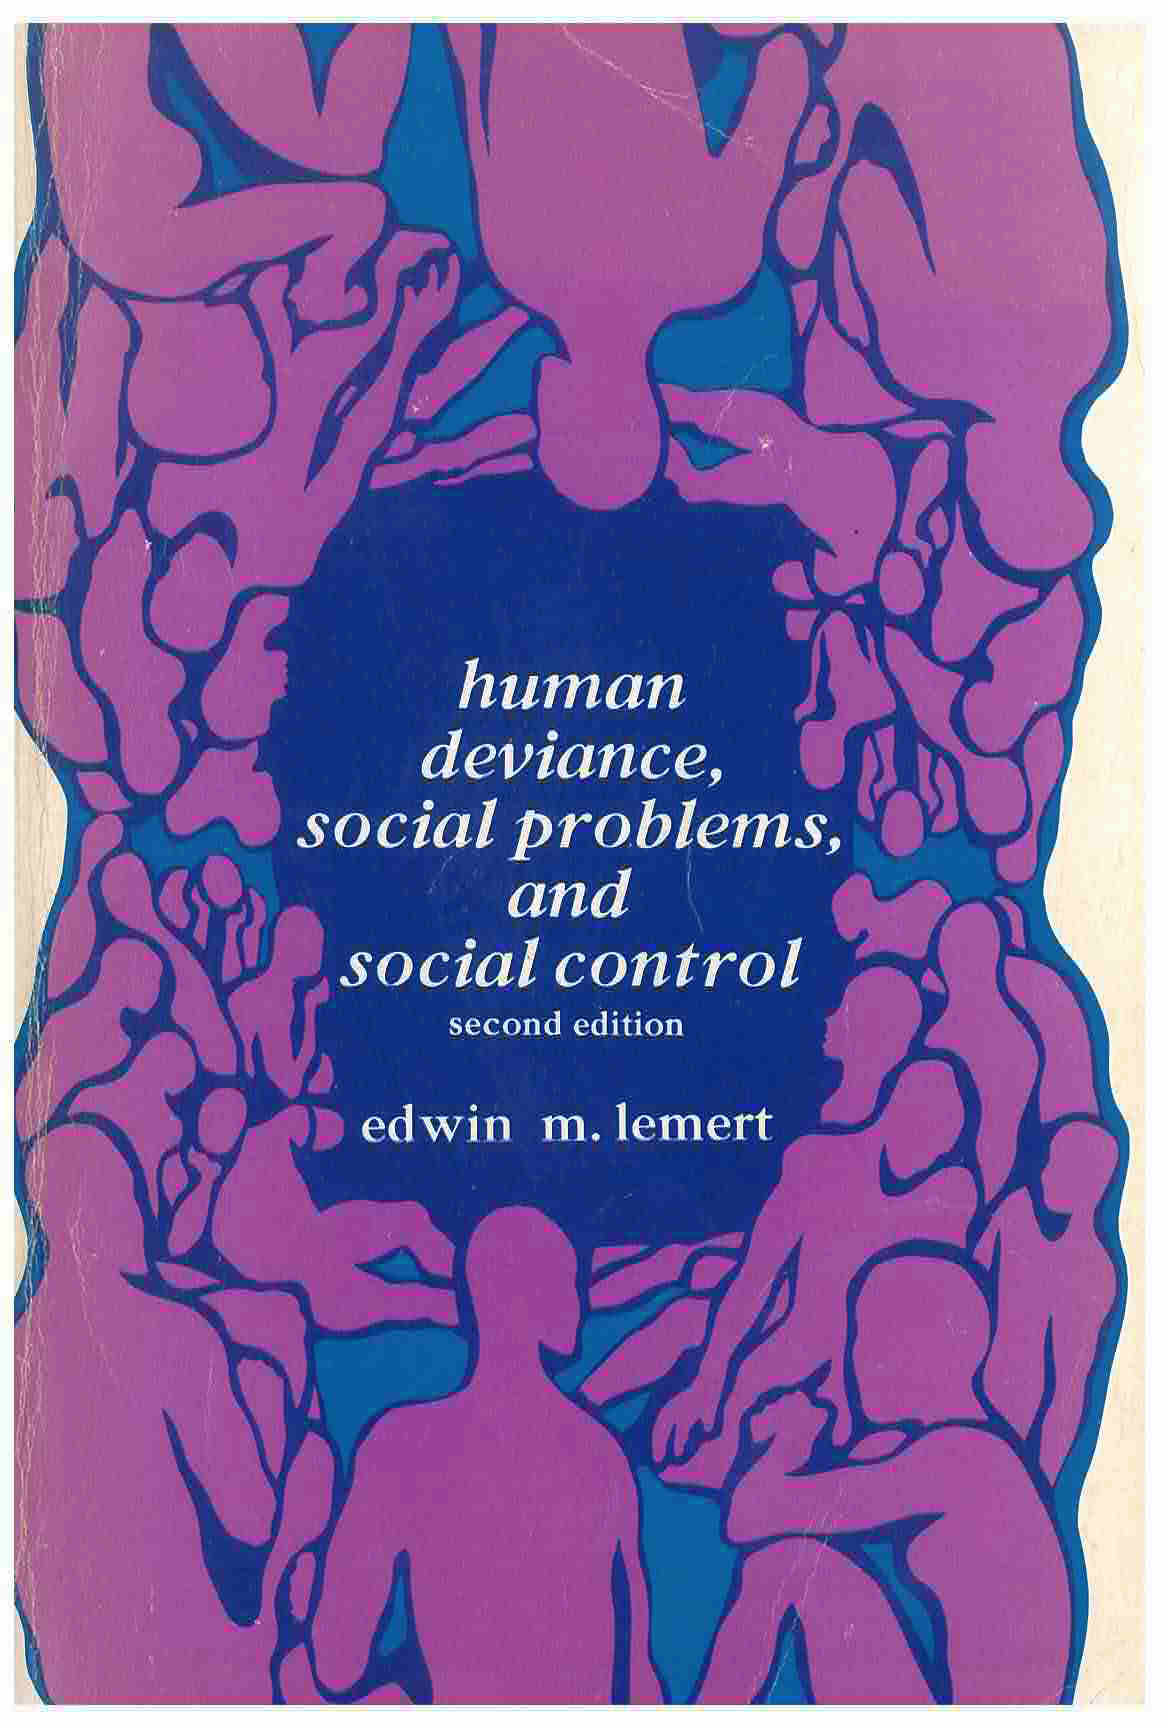 Human deviance, social problems, and social control